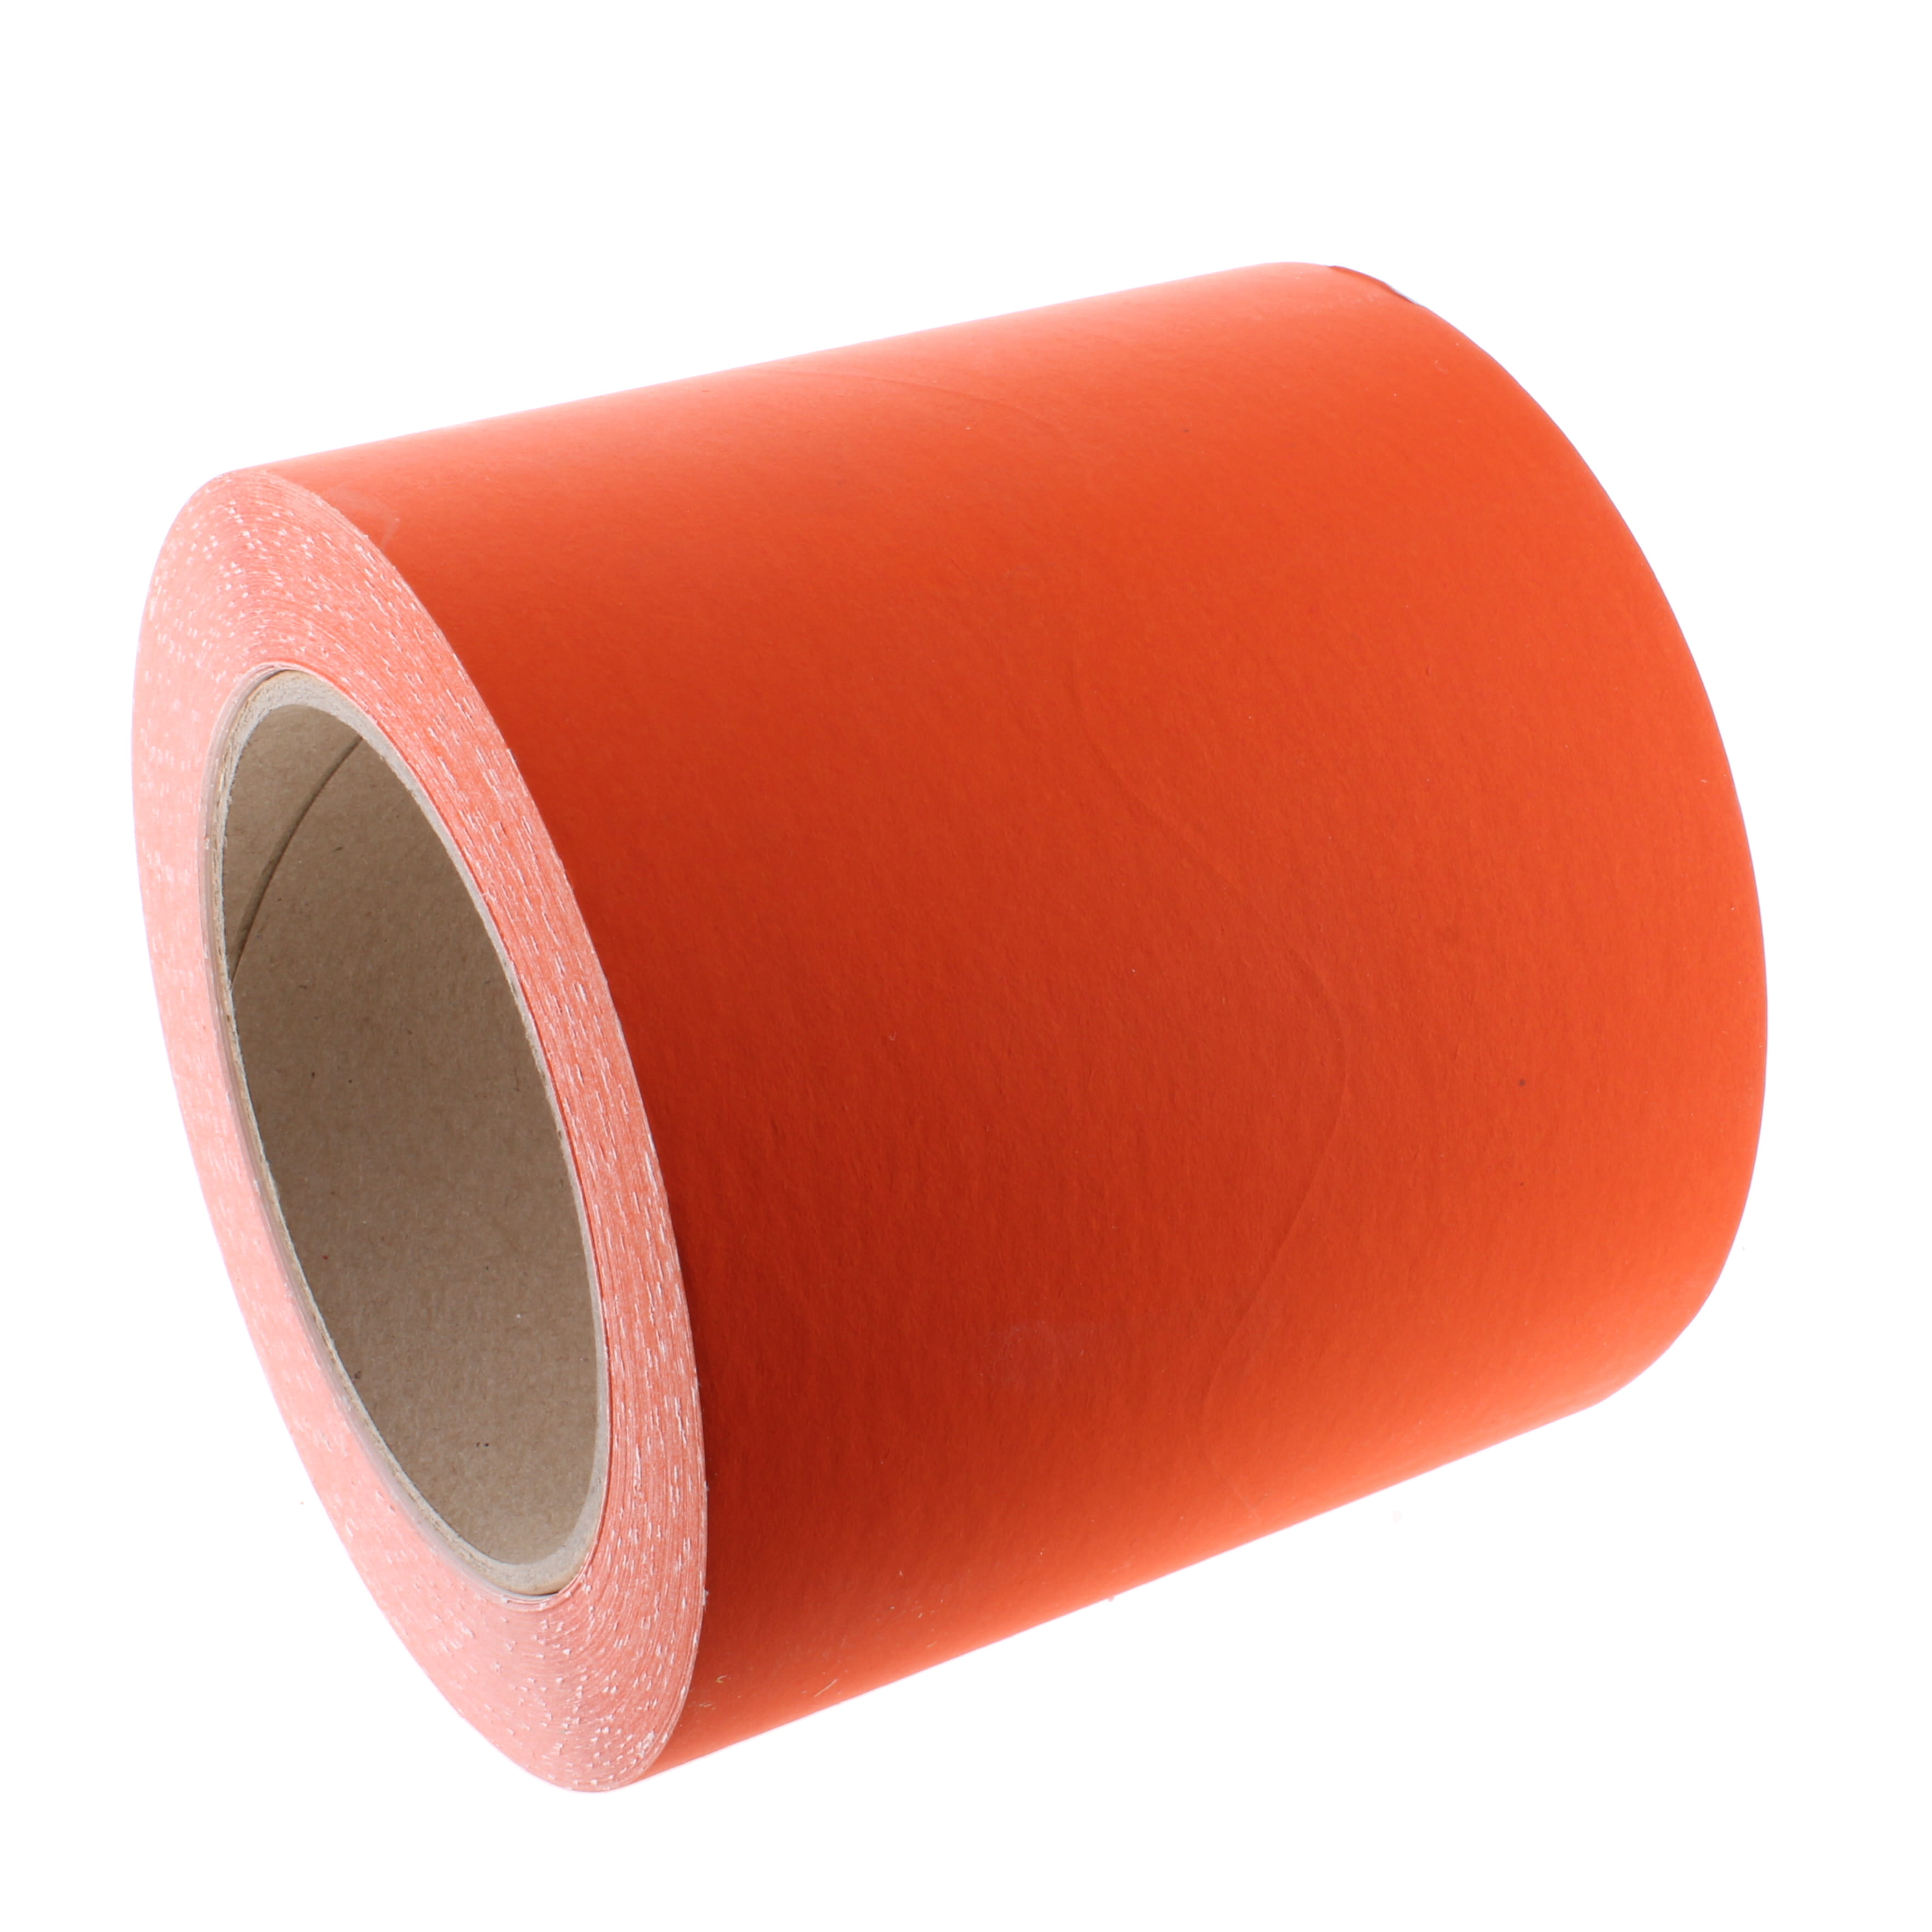 Paper Border Rolls Scalloped Edge Orange 57mm x 50m - pack of 2